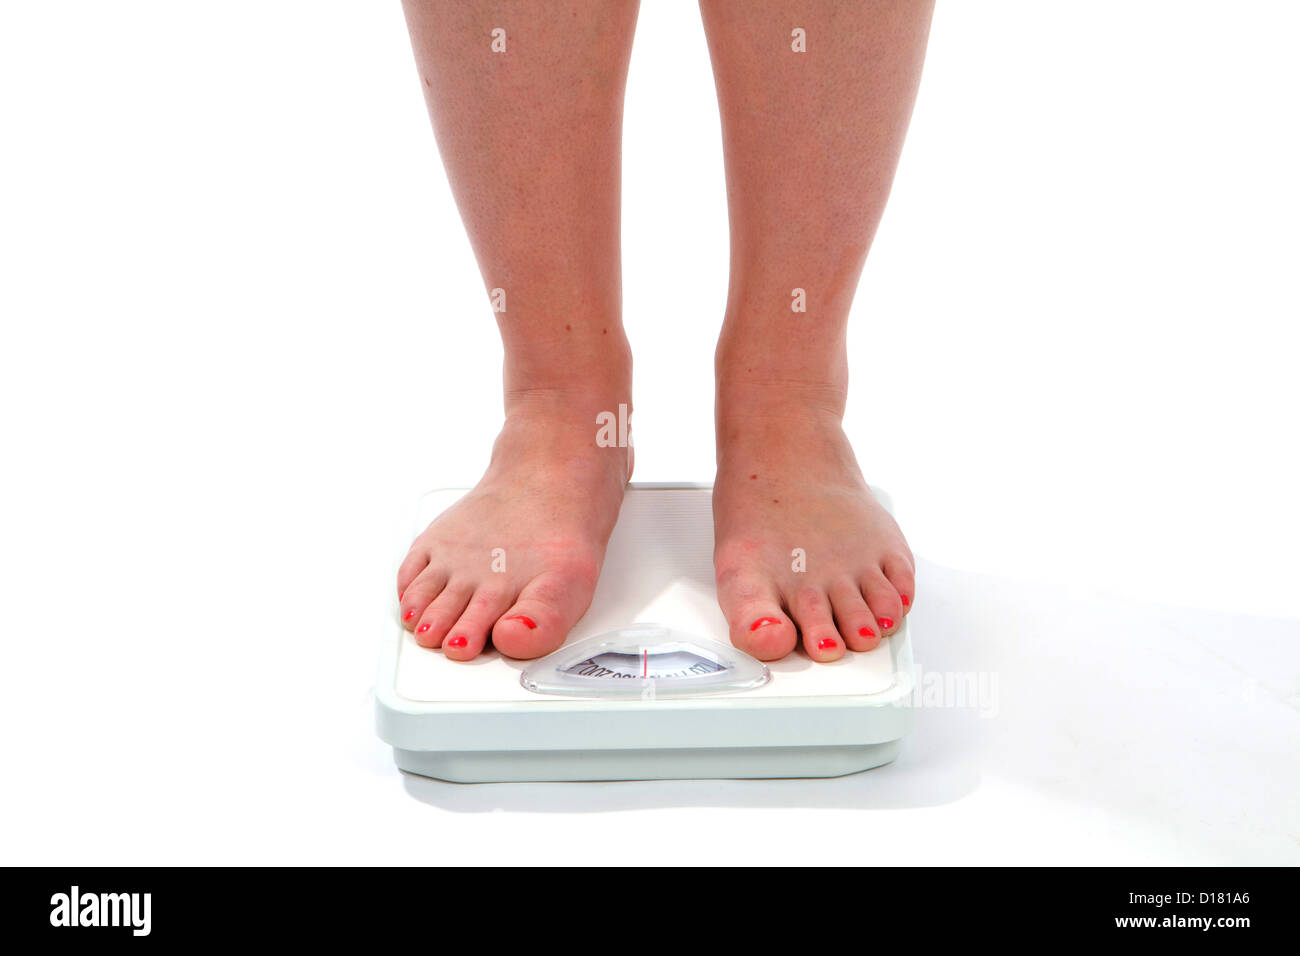 https://c8.alamy.com/comp/D181A6/woman-feet-on-a-scale-as-she-checks-her-weight-D181A6.jpg